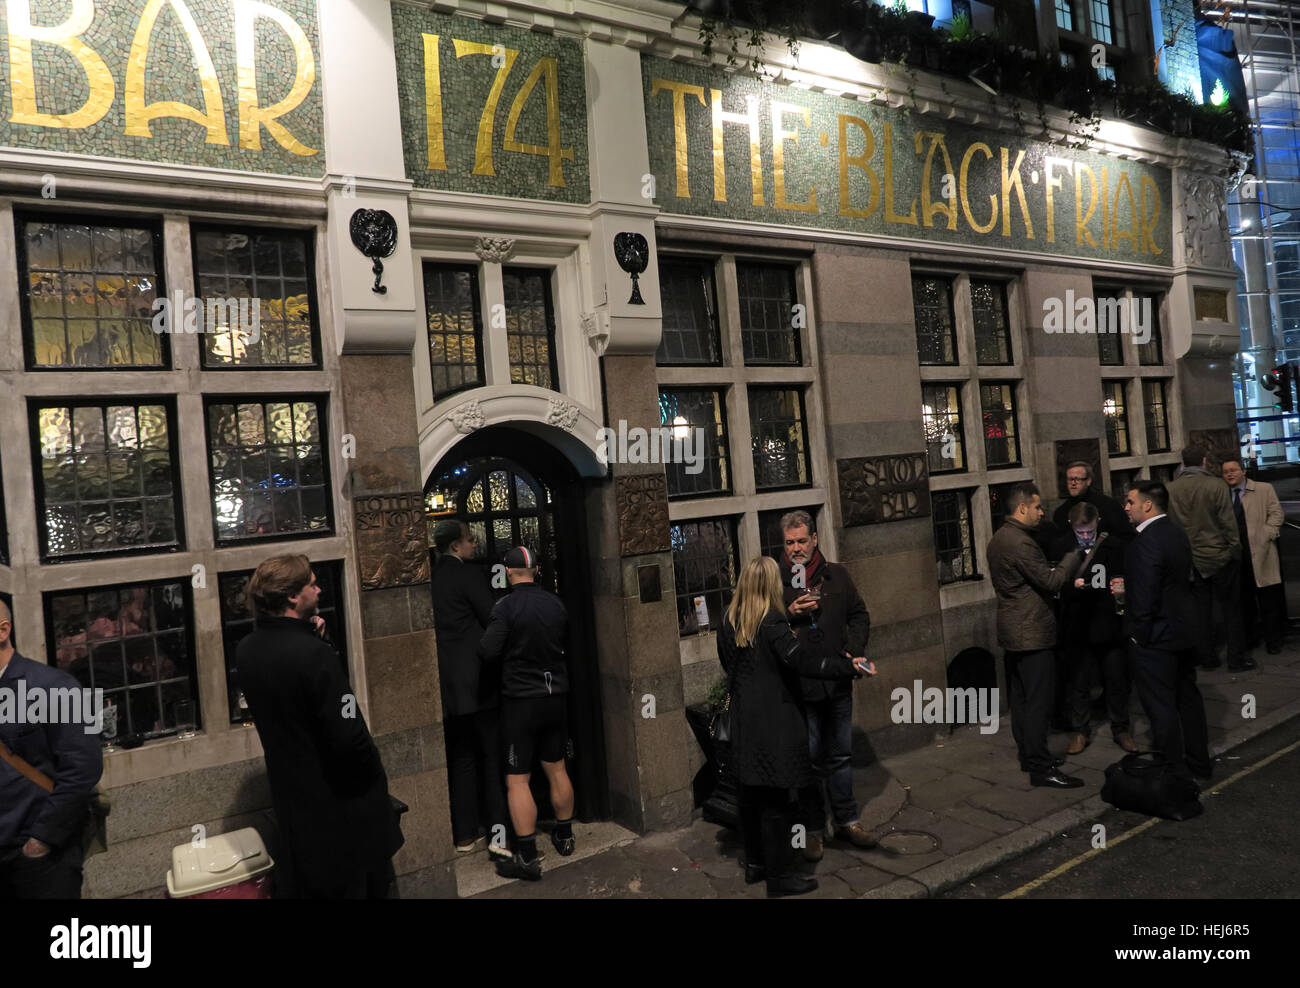 The Black Friar, Blackfriars, London, England, UK at night Stock Photo